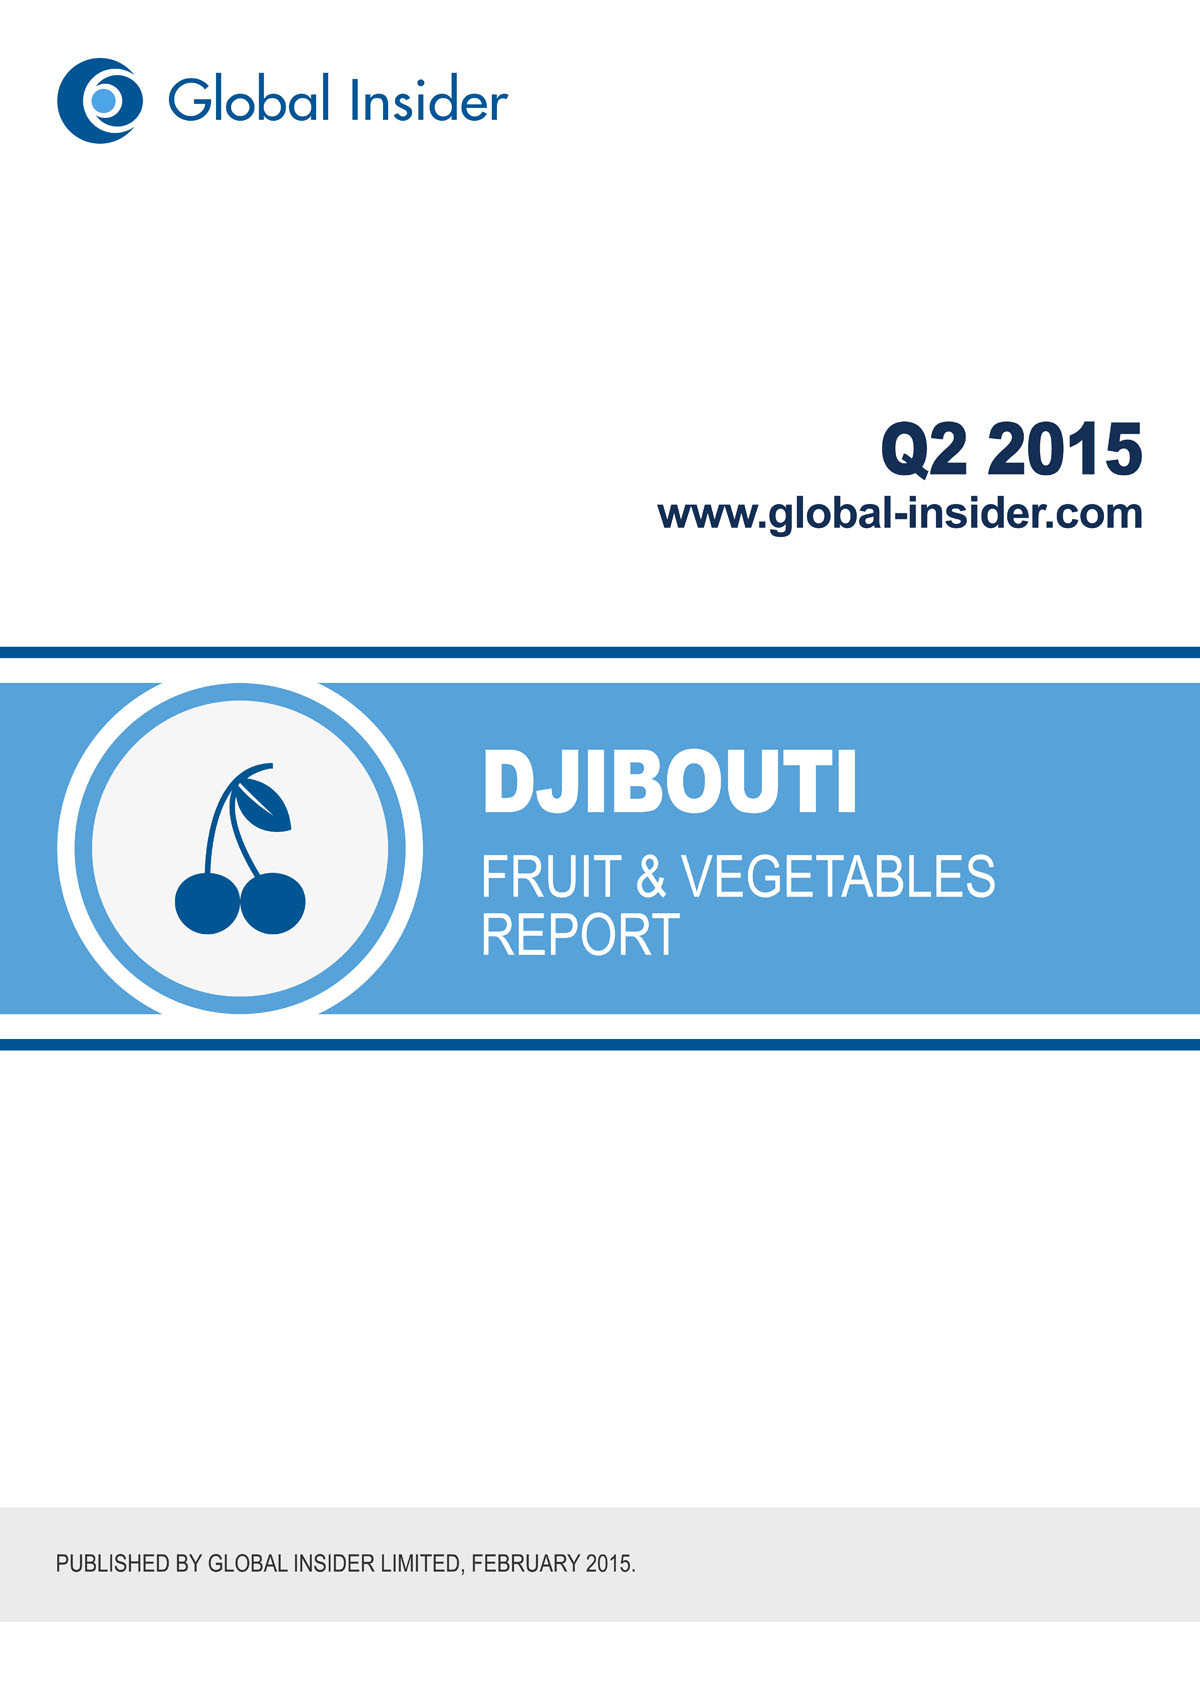 Djibouti Fruit & Vegetables Report